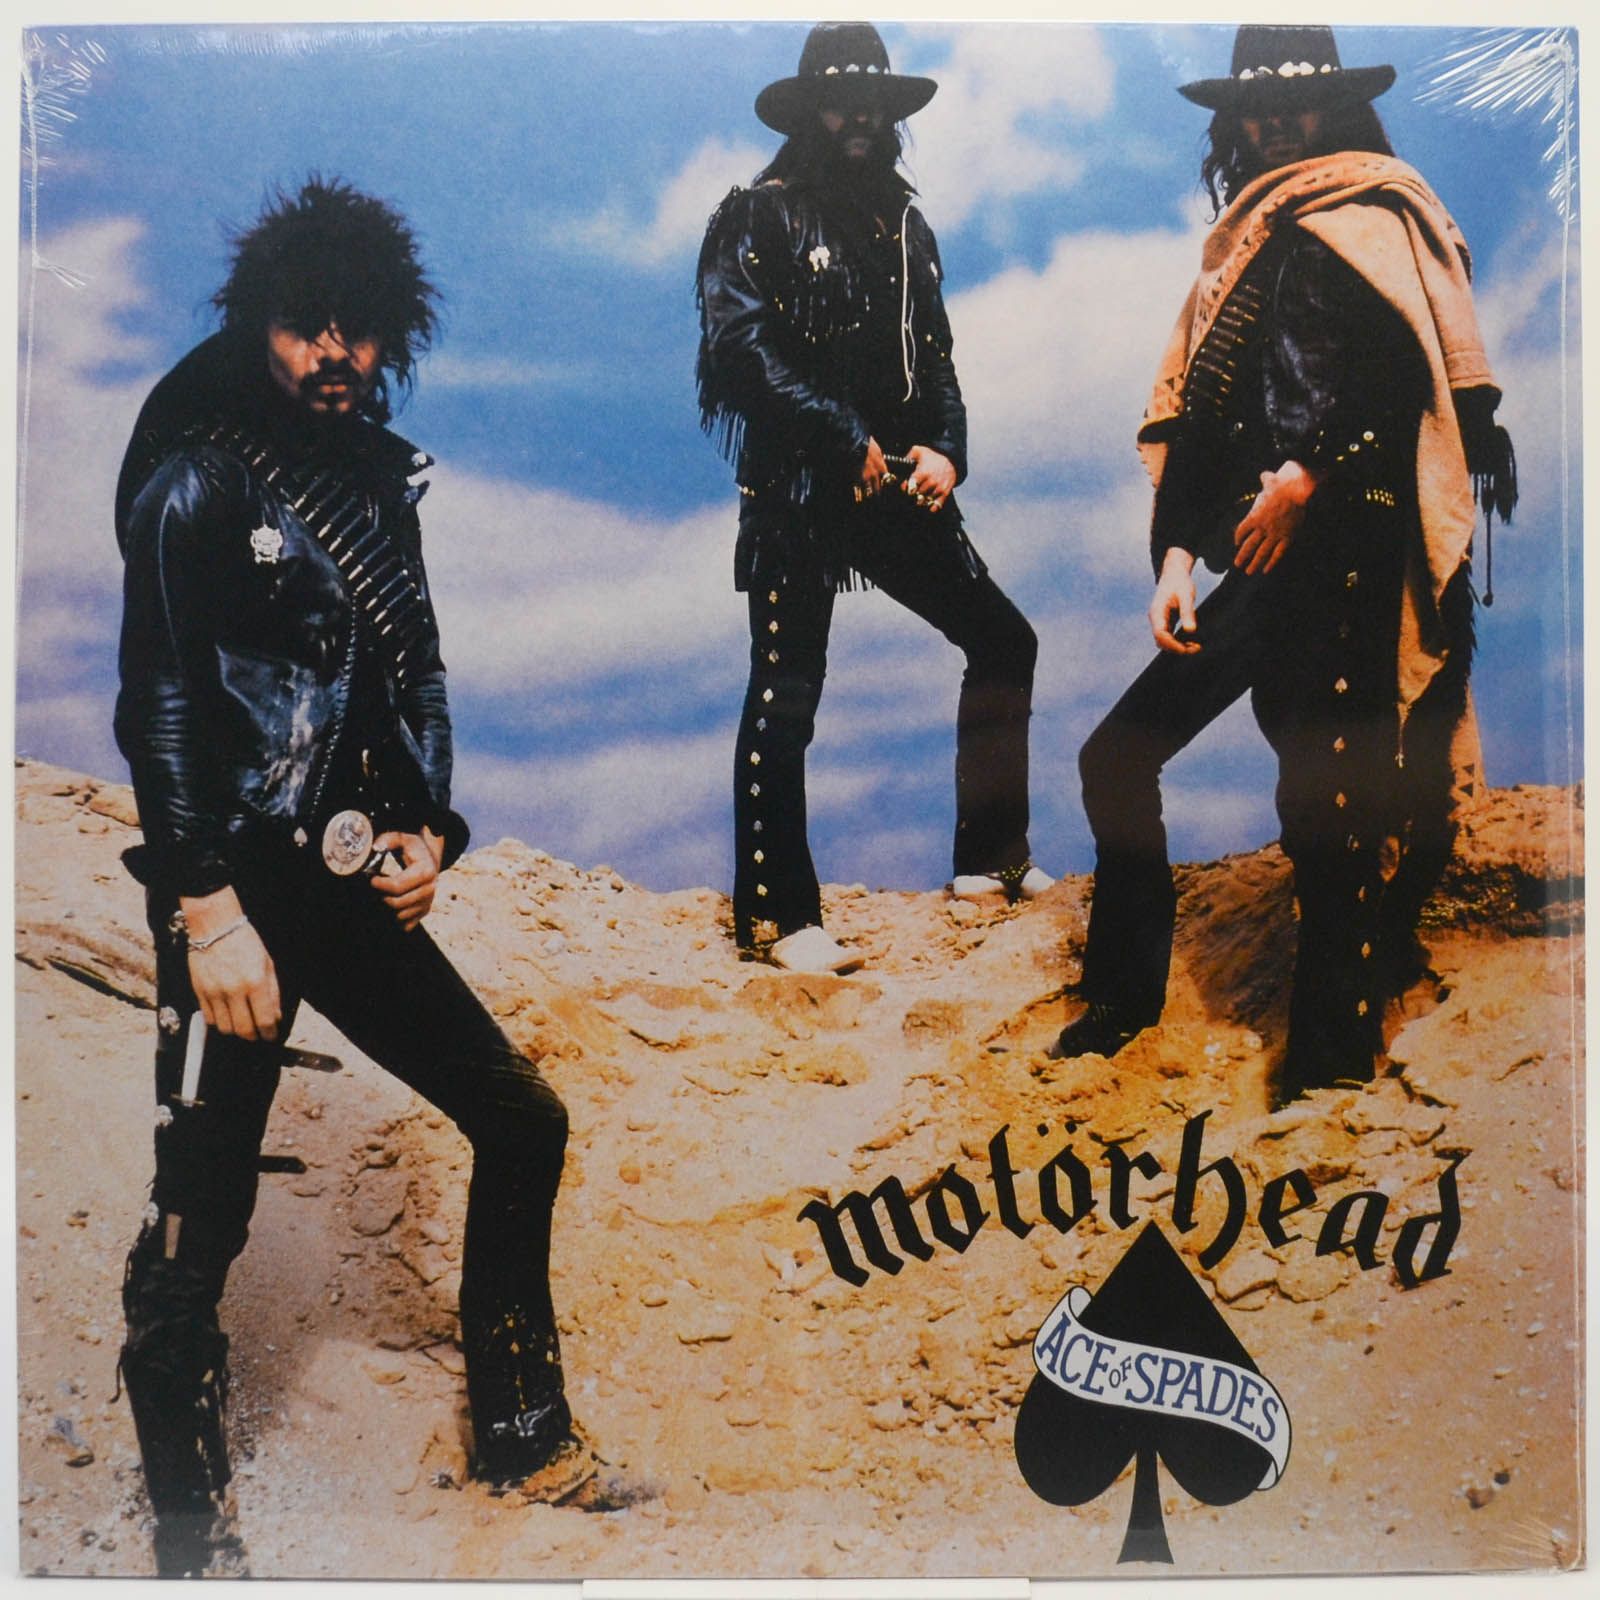 Motörhead — Ace Of Spades, 1980